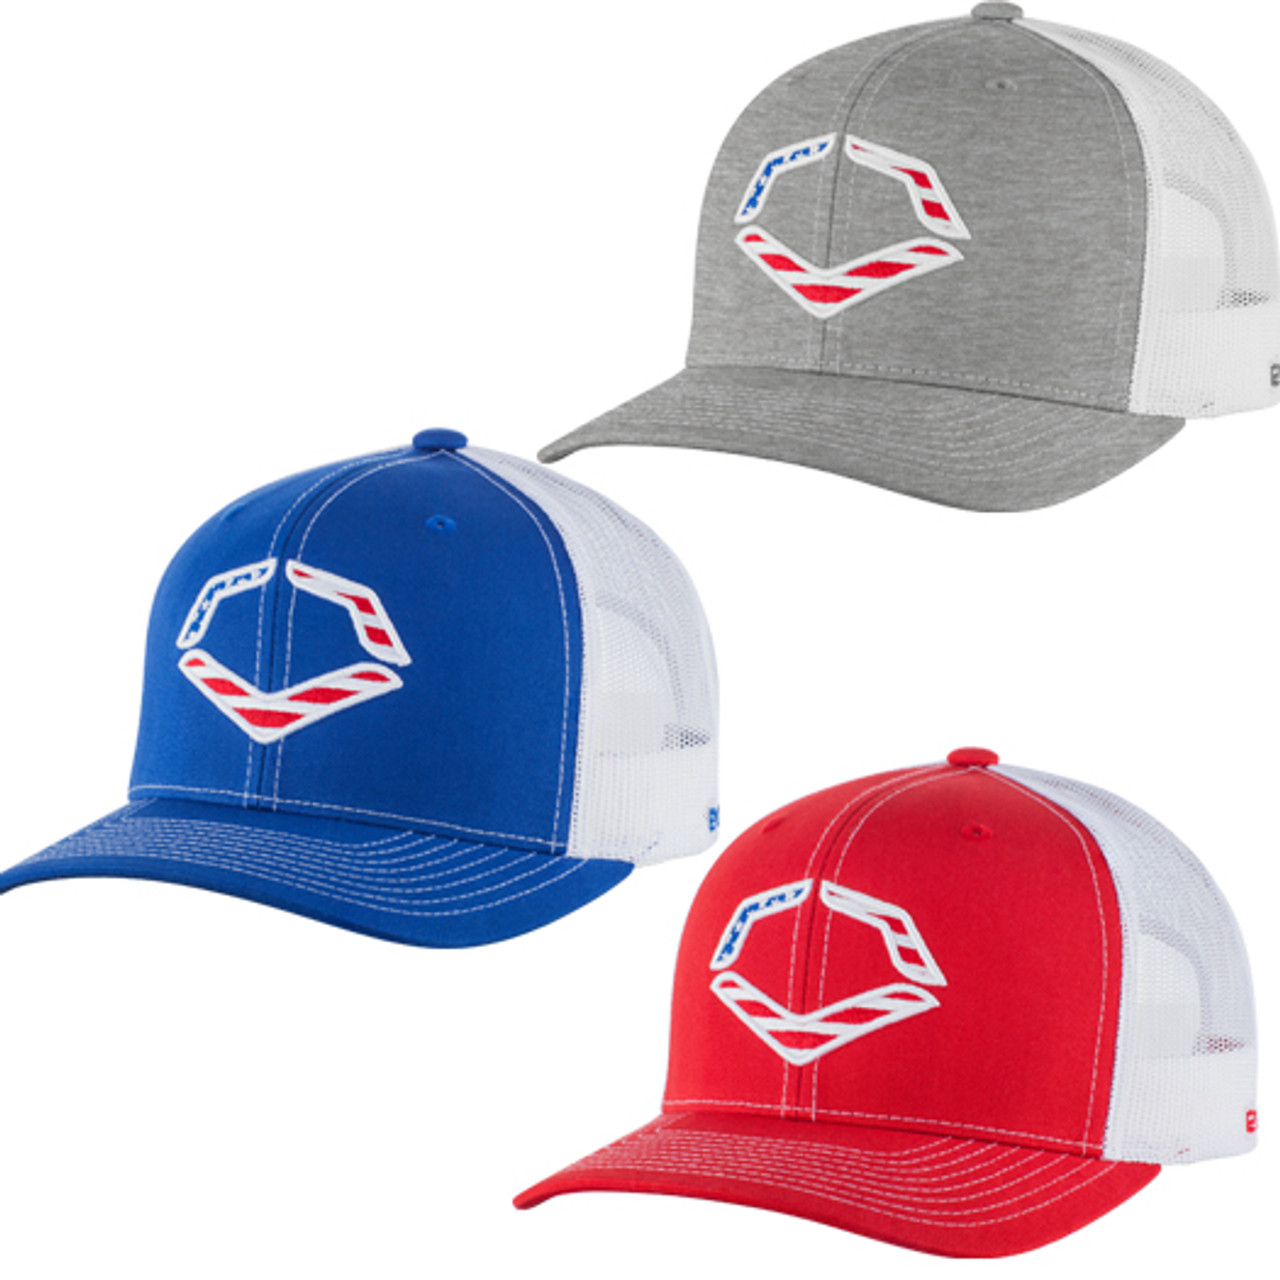 EvoShield USA Snapback Hat 1034320 - Bases Loaded